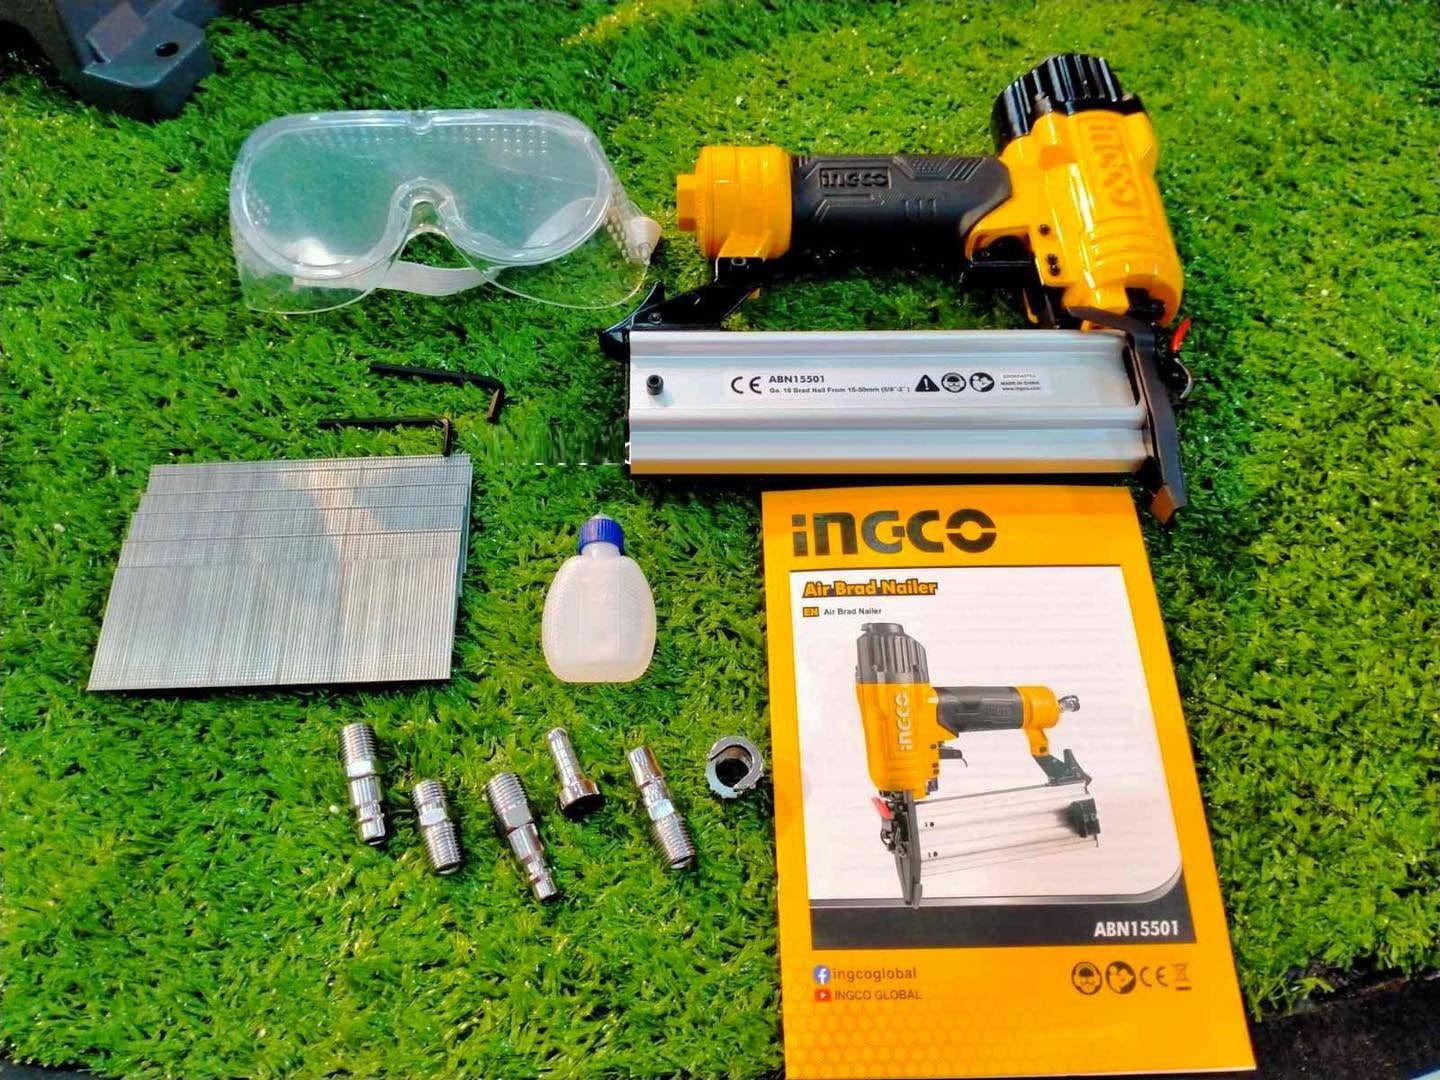 Ingco Air Brad Nailer - ABN15501 | Supply Master | Accra, Ghana Nailer & Stapler Buy Tools hardware Building materials